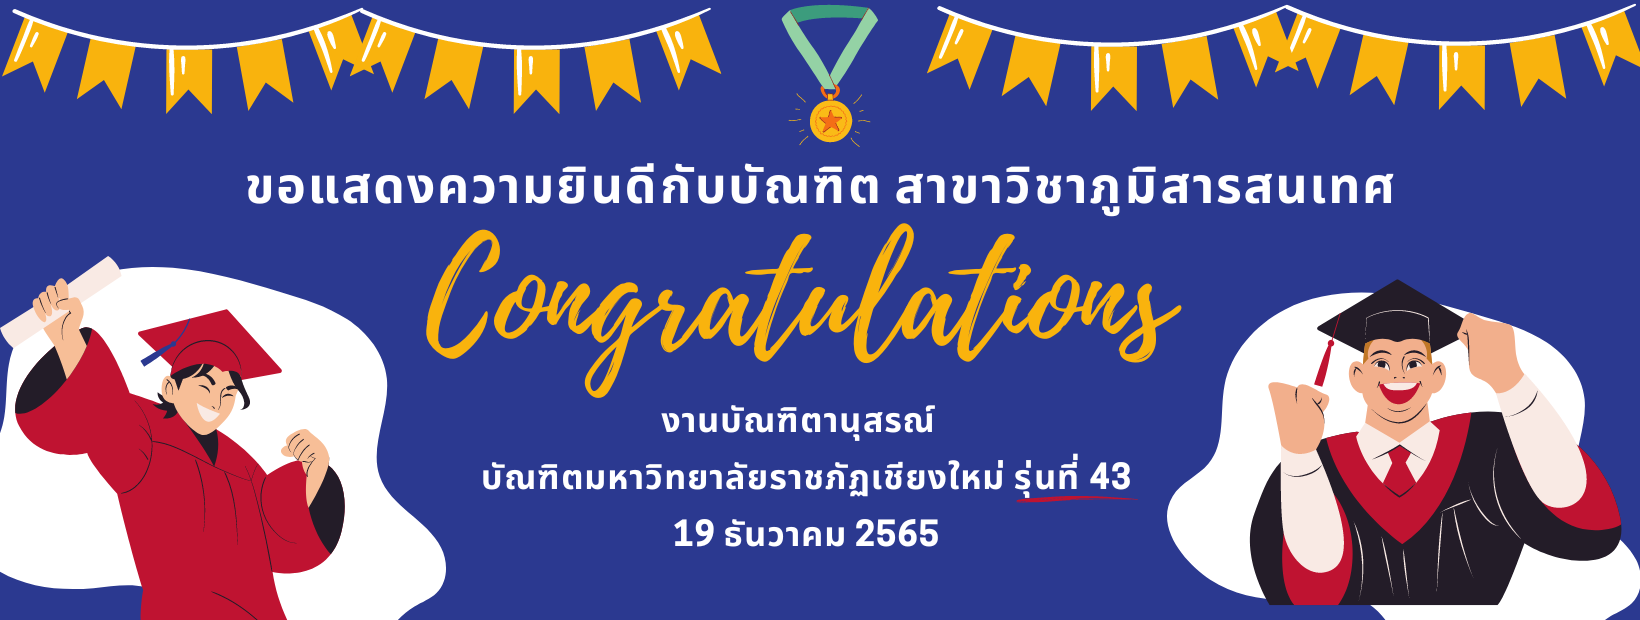 Banner_congratulation